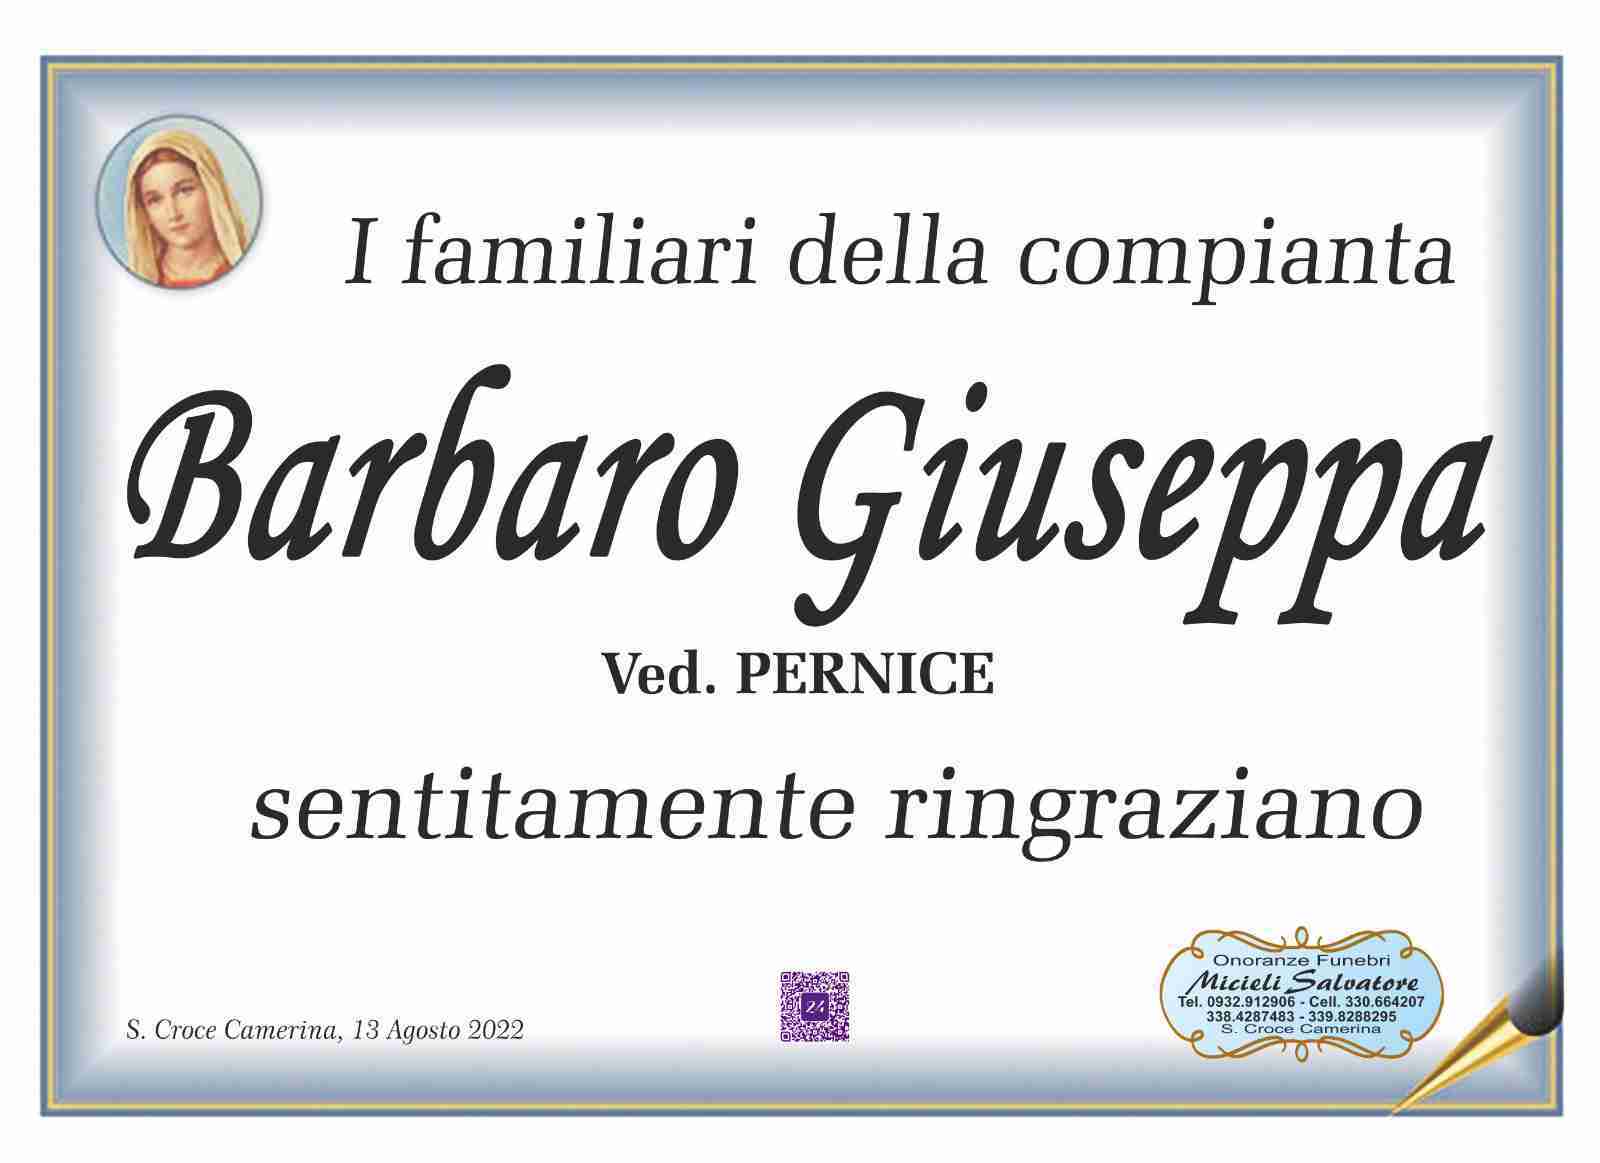 Giuseppa Barbaro